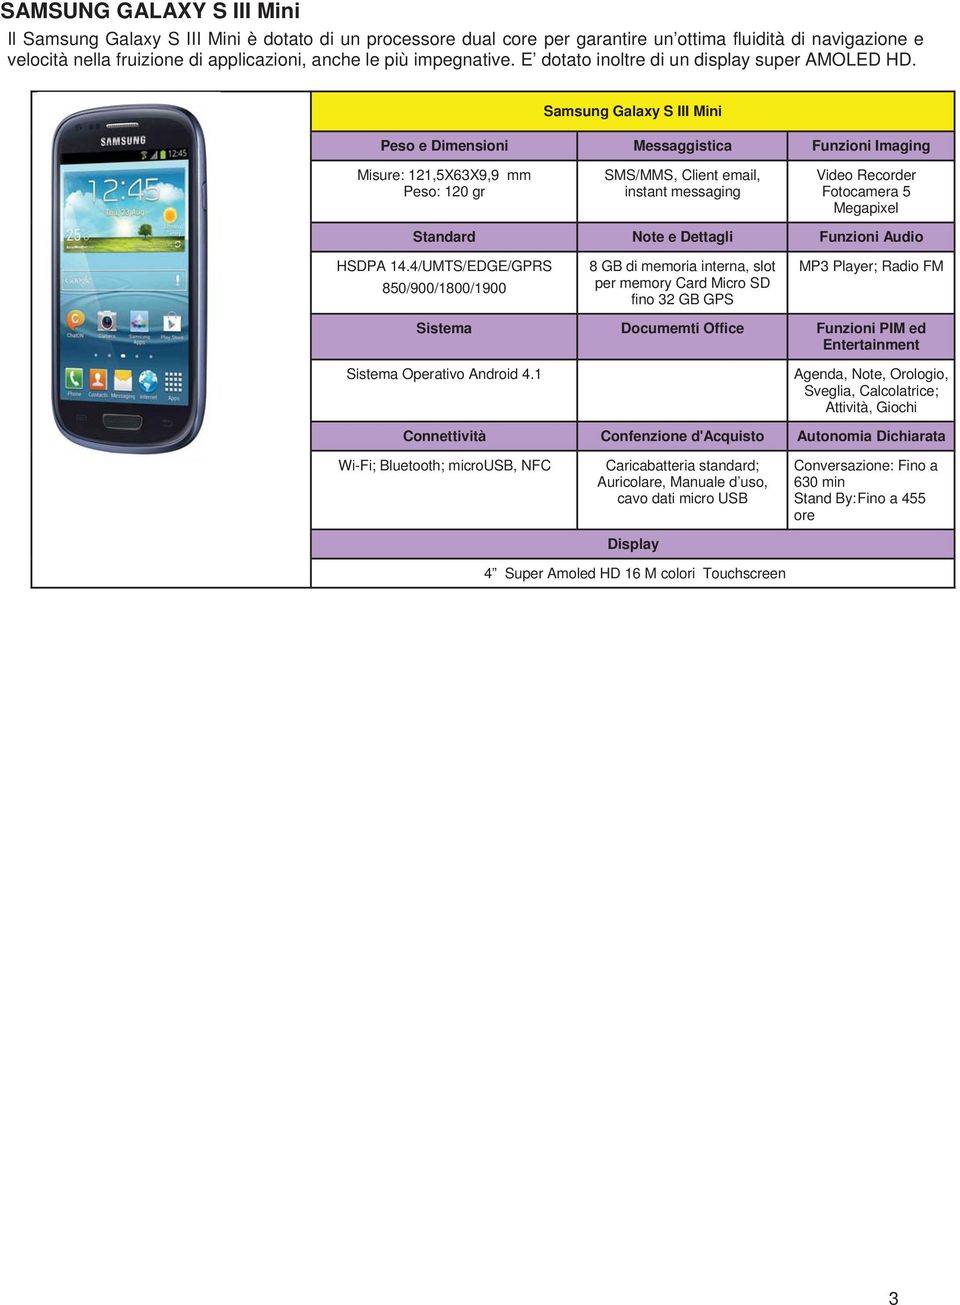 Samsung Galaxy S III Mini Misure: 121,5X63X9,9 mm Peso: 120 gr SMS/MMS, Client email, instant messaging Video Recorder Fotocamera 5 Megapixel HSDPA 14.